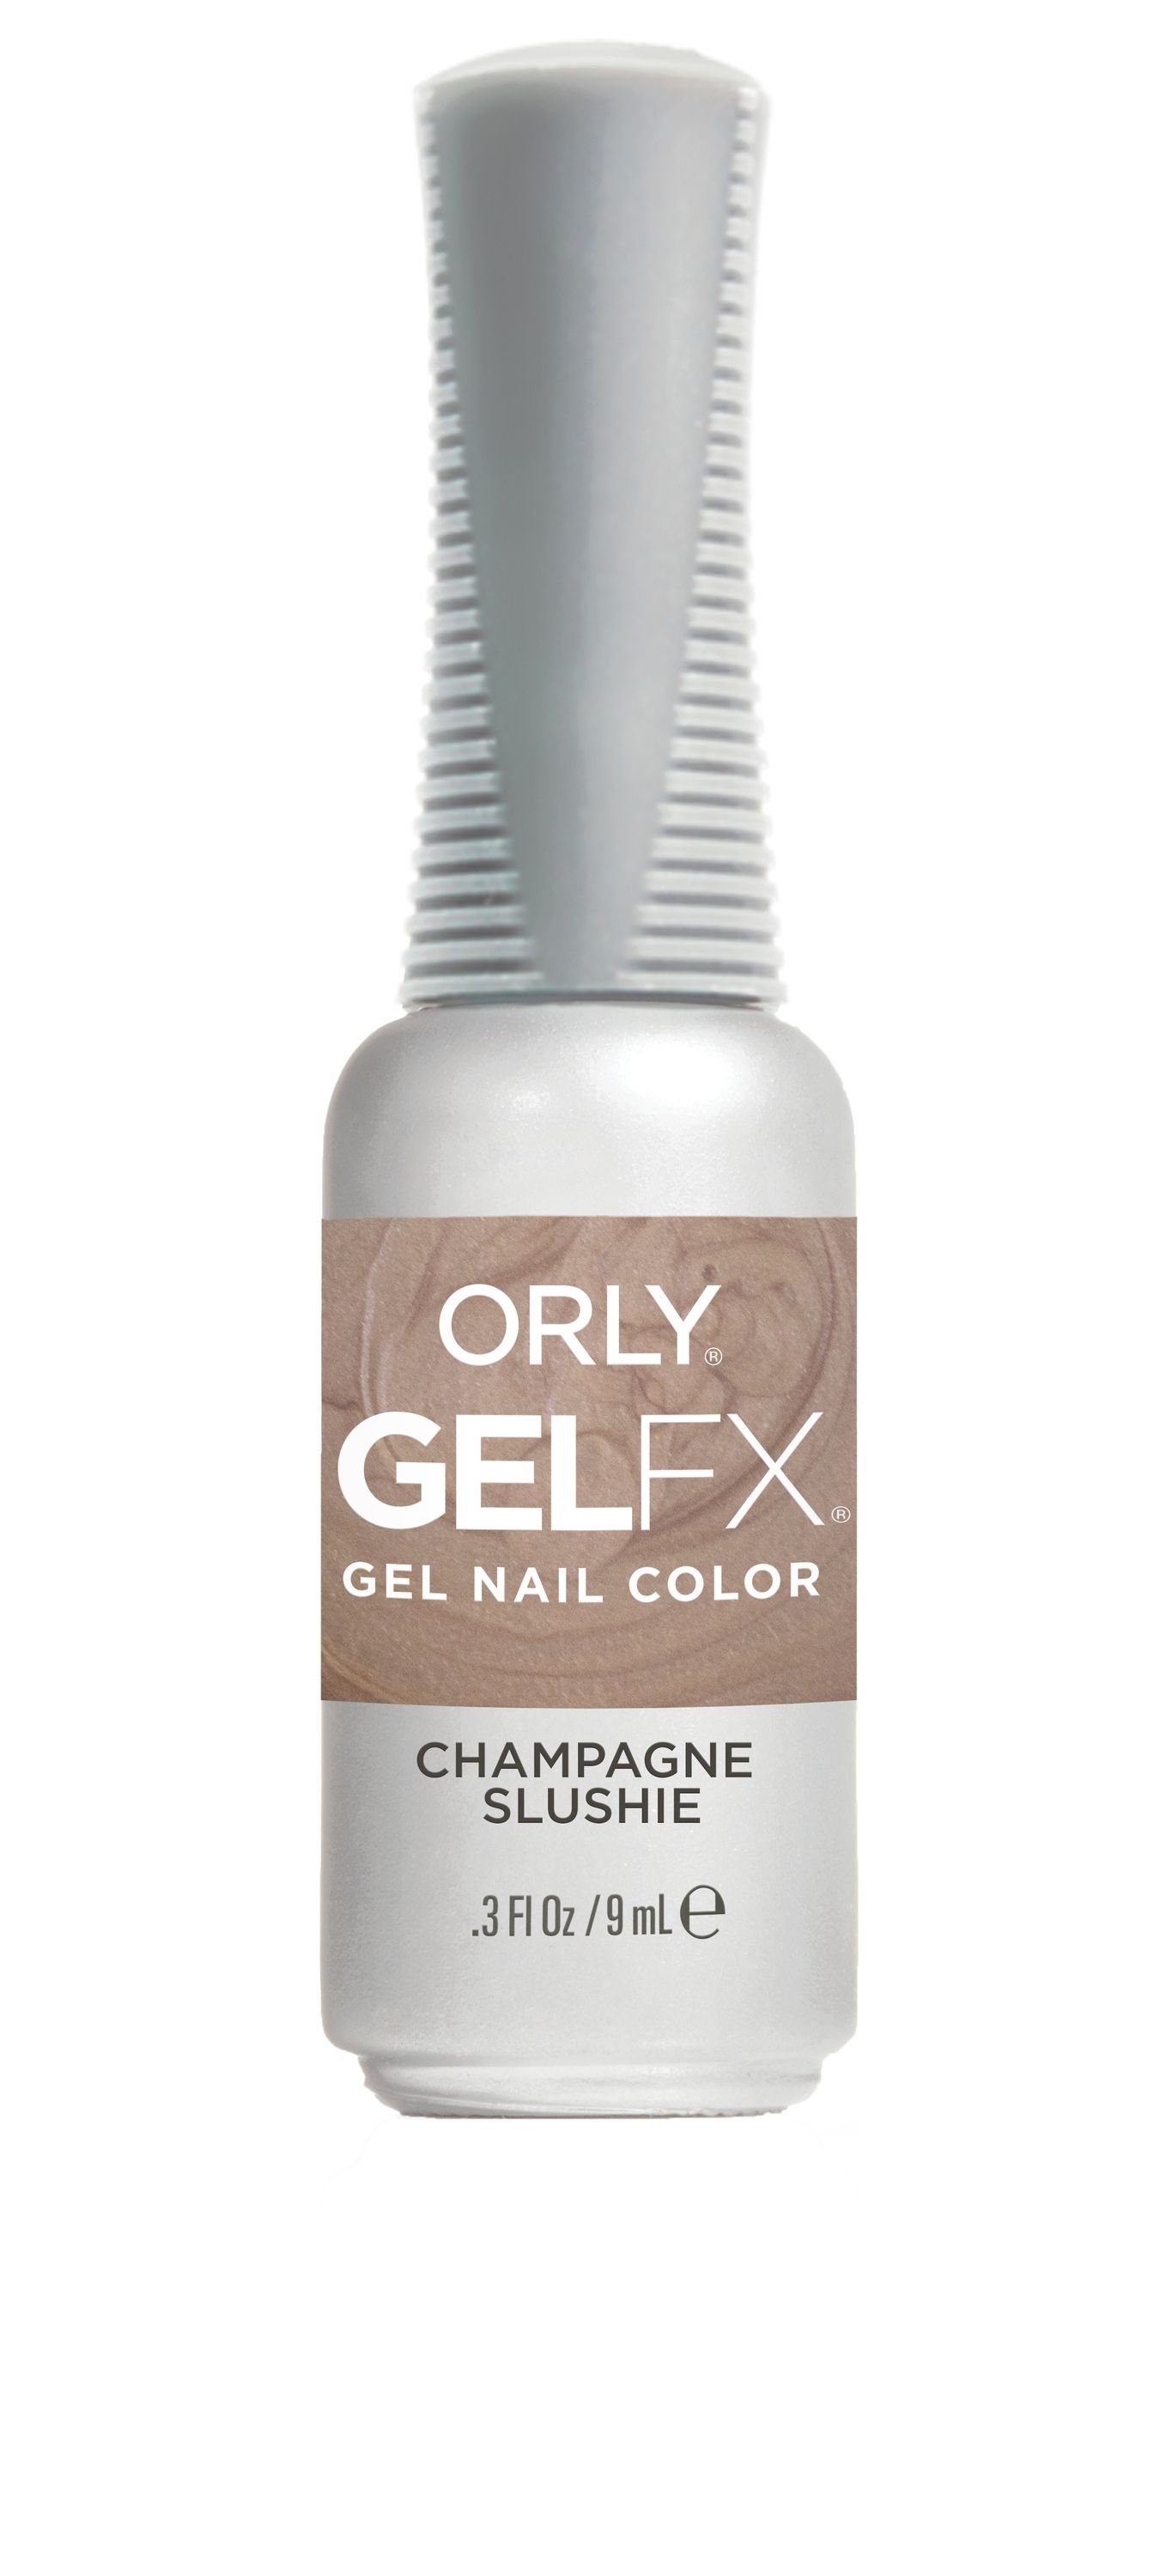 ORLY UV-Nagellack GEL FX Champagne Slushie, 9ML | Nagellacke